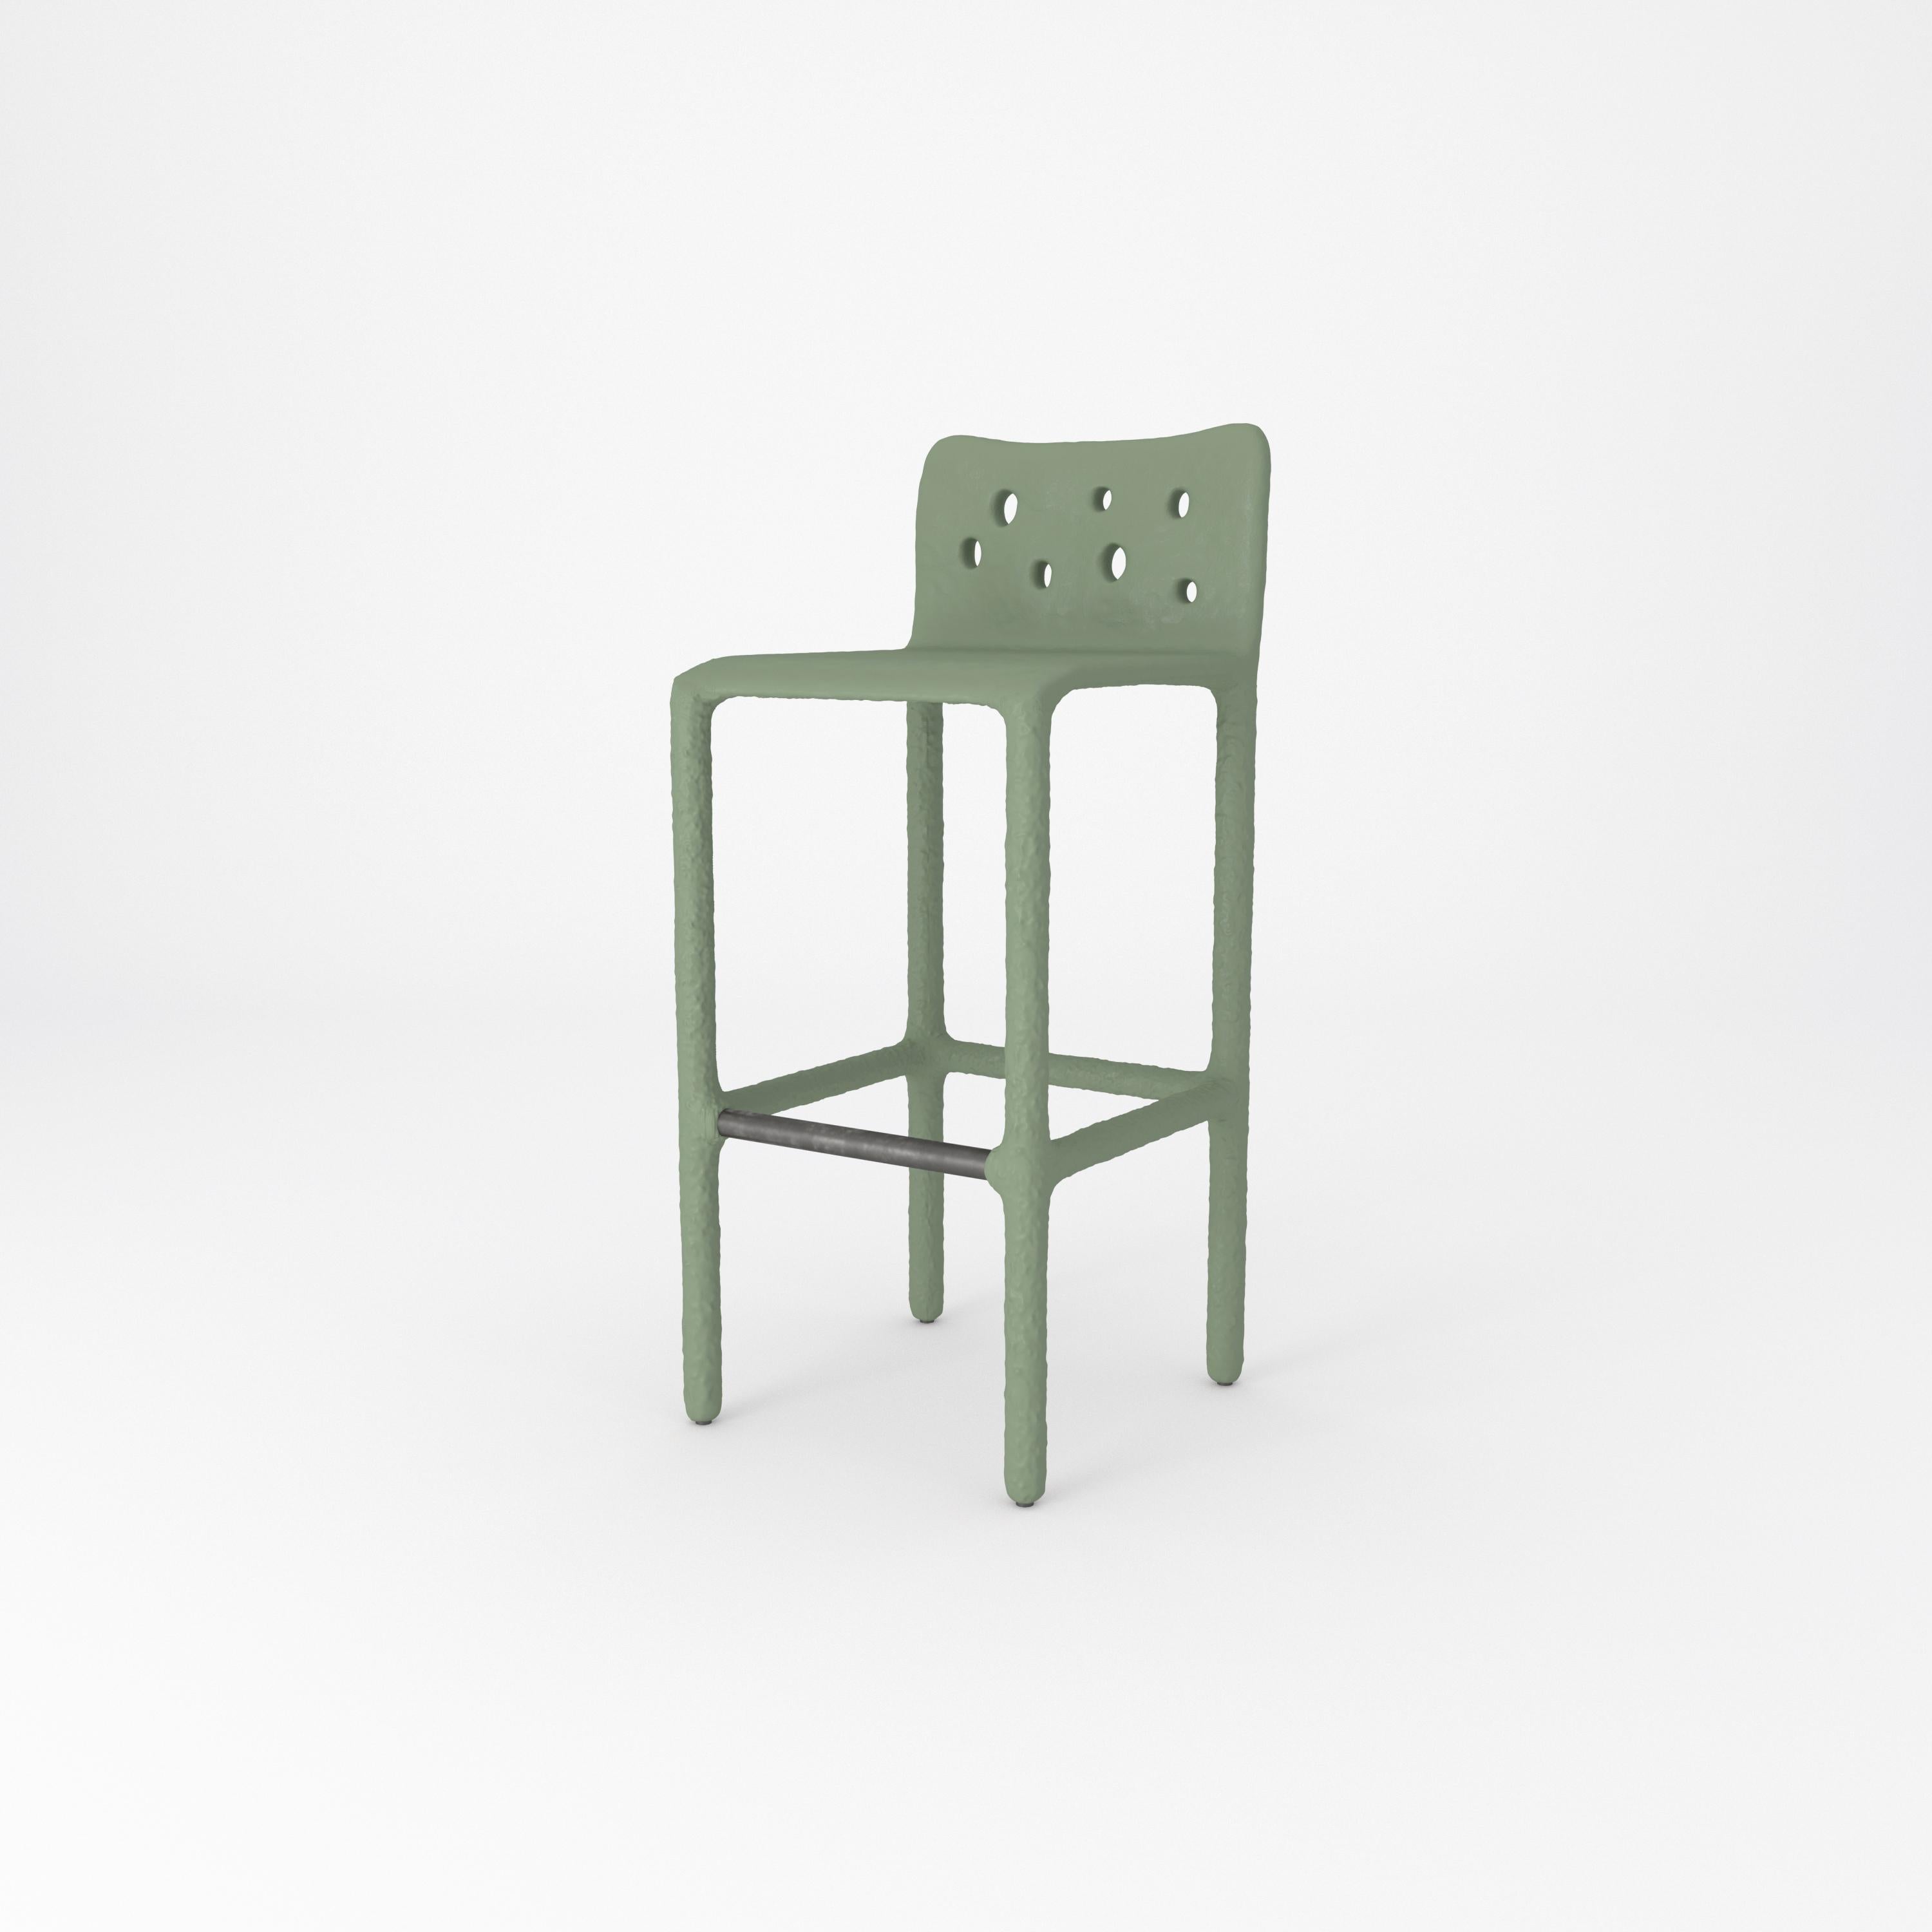 White Sculpted Contemporary Chair by FAINA 8